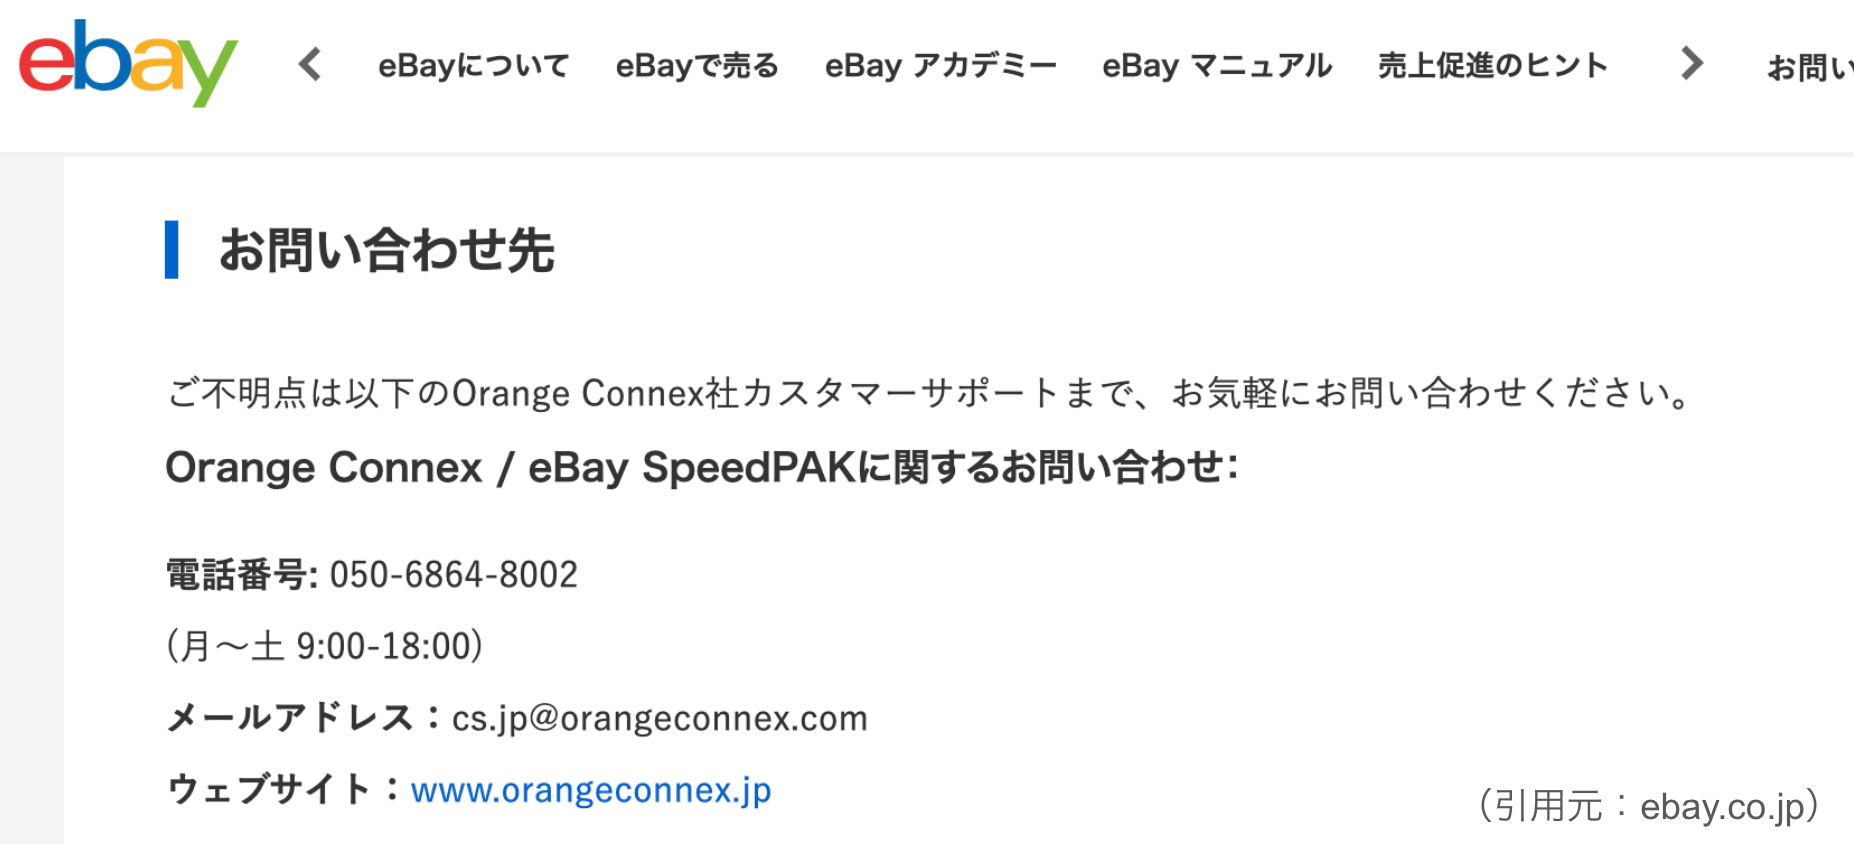 Orange Connex 社 カスタマーサポート